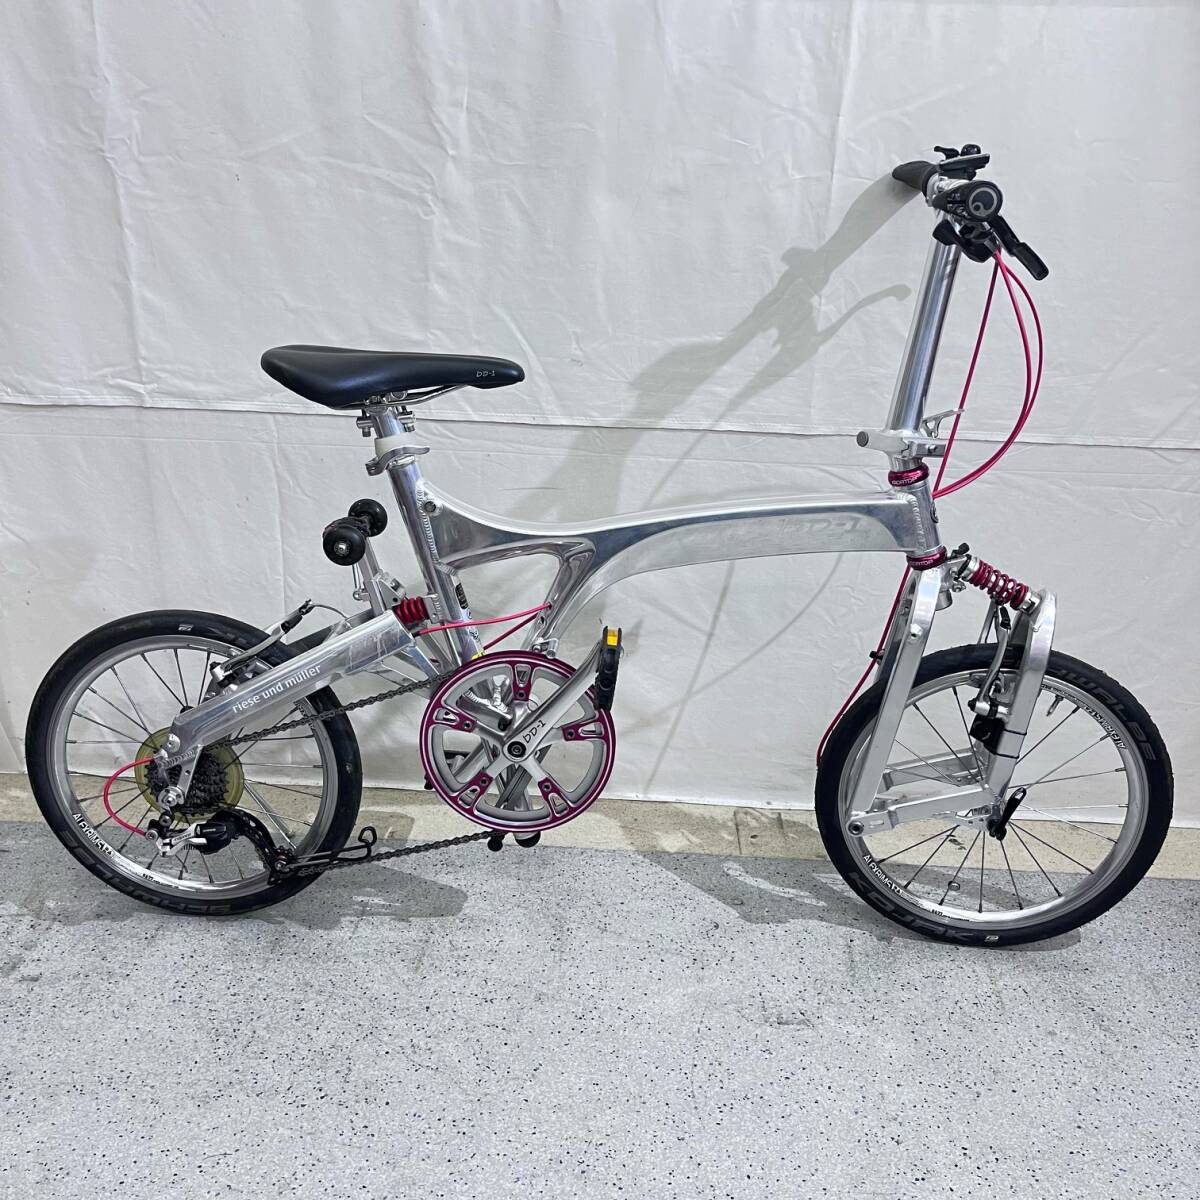 R&Mlaiz and Mueller BD-1 9 speed ka Pleo aluminium frame foldable bicycle mini bicycle 